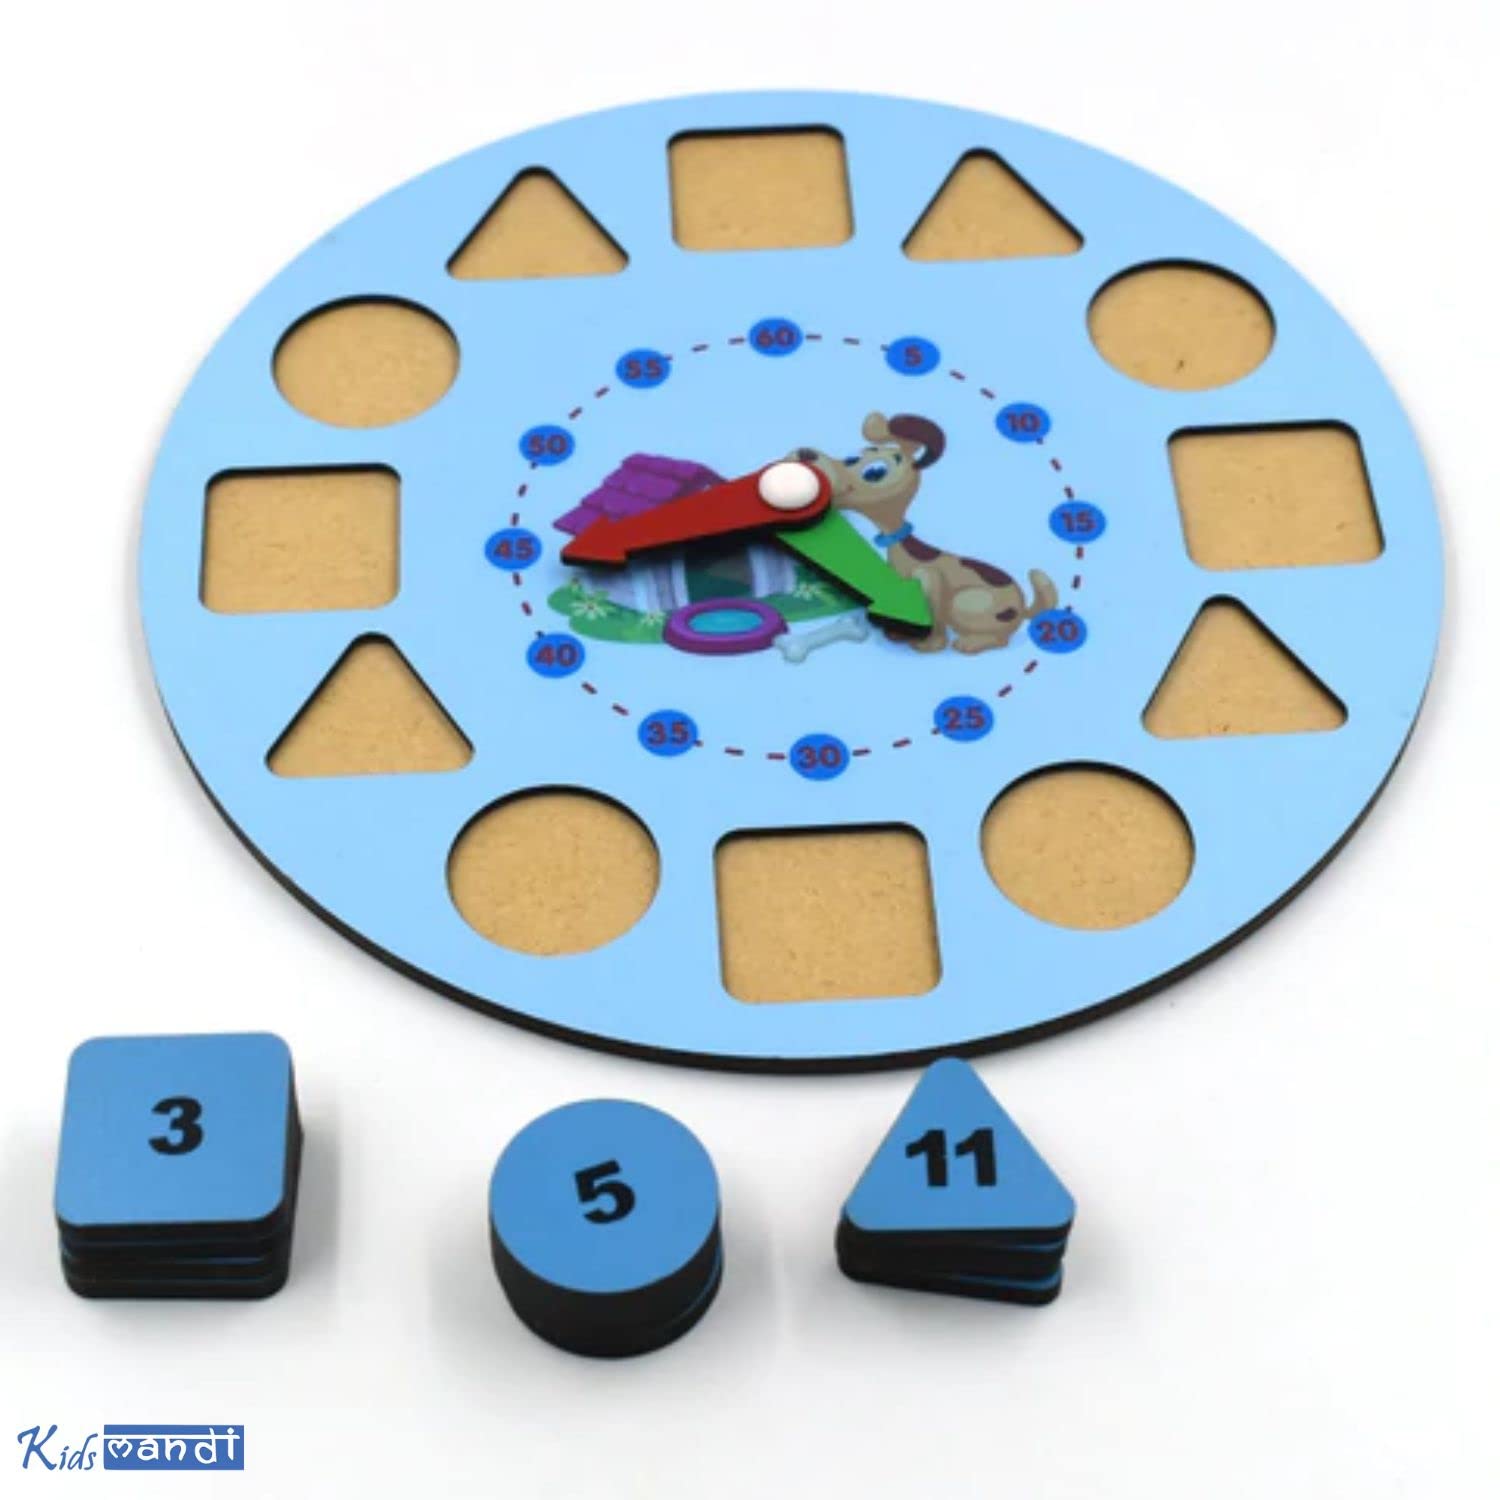 Kids Mandi wooden shape color sorting clock educational toy.